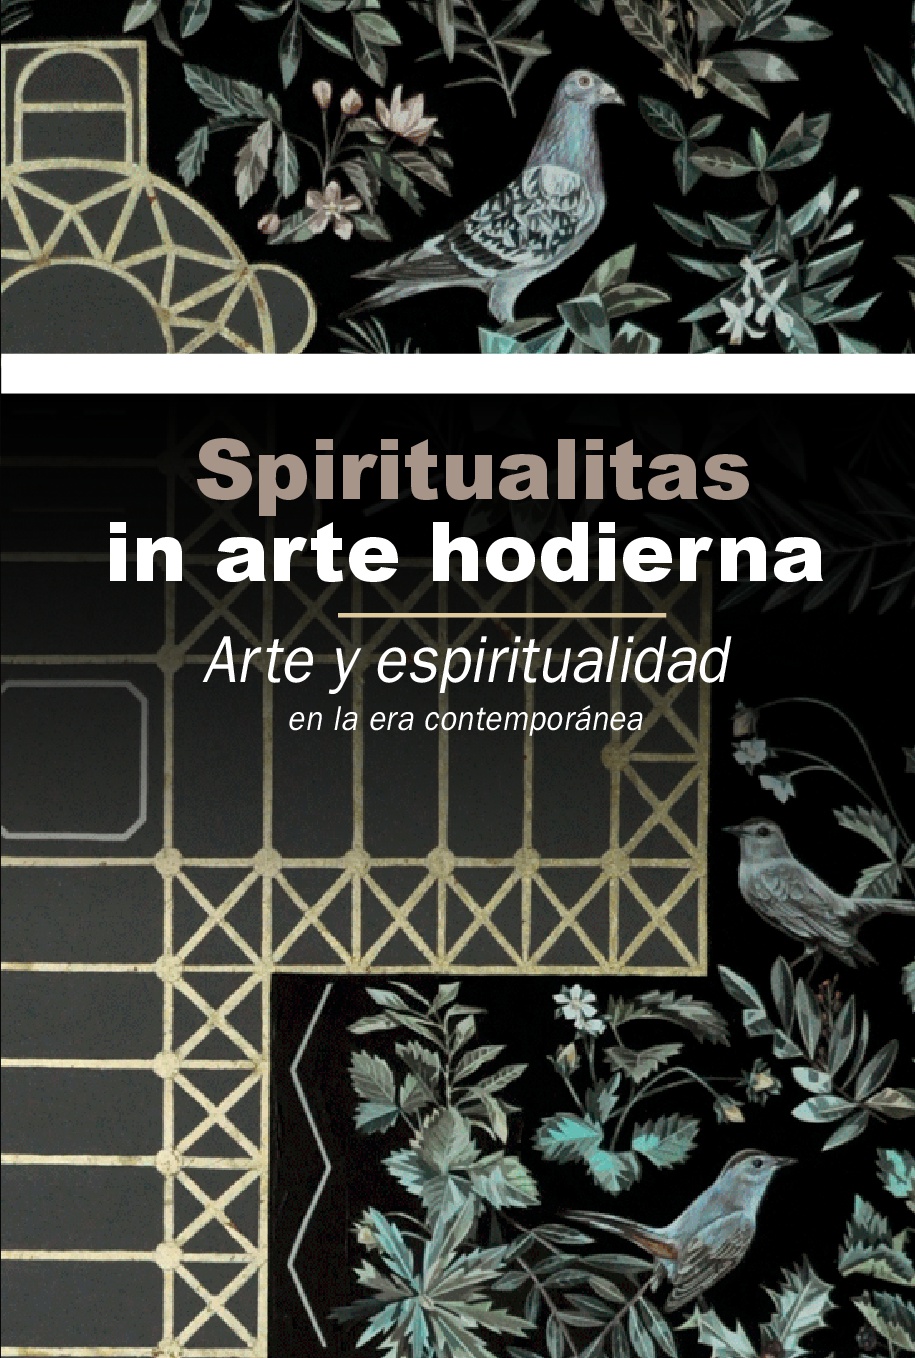 Imagen de portada del libro Spiritualitas in arte hodierna